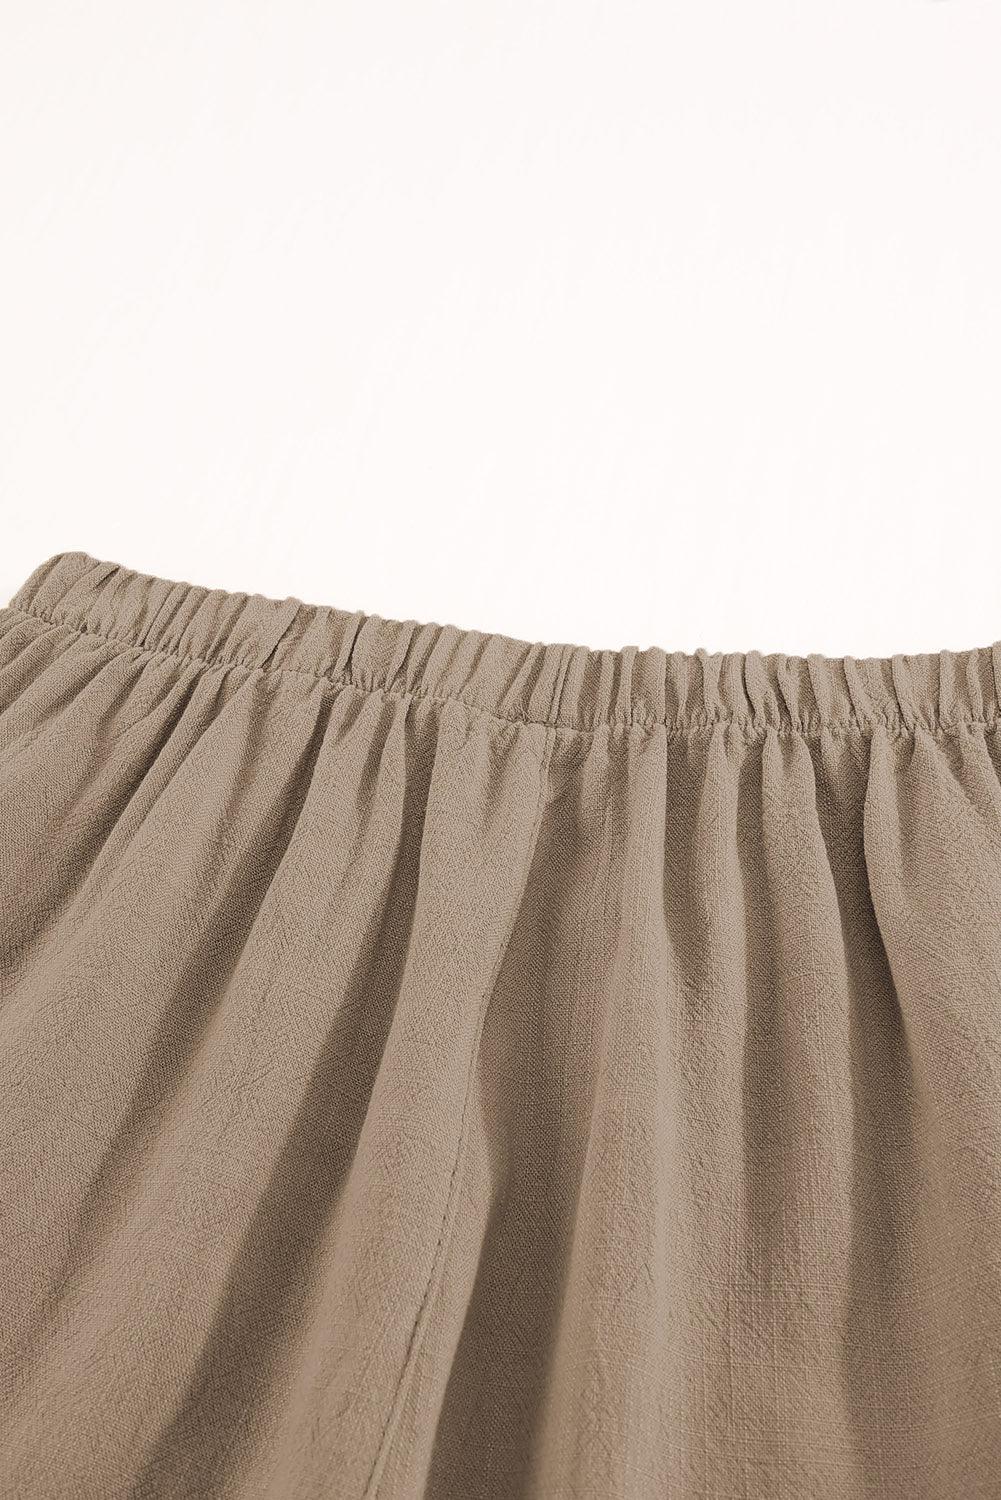 Khaki Casual Pocketed Ruffle High Waist Shorts - Vesteeto